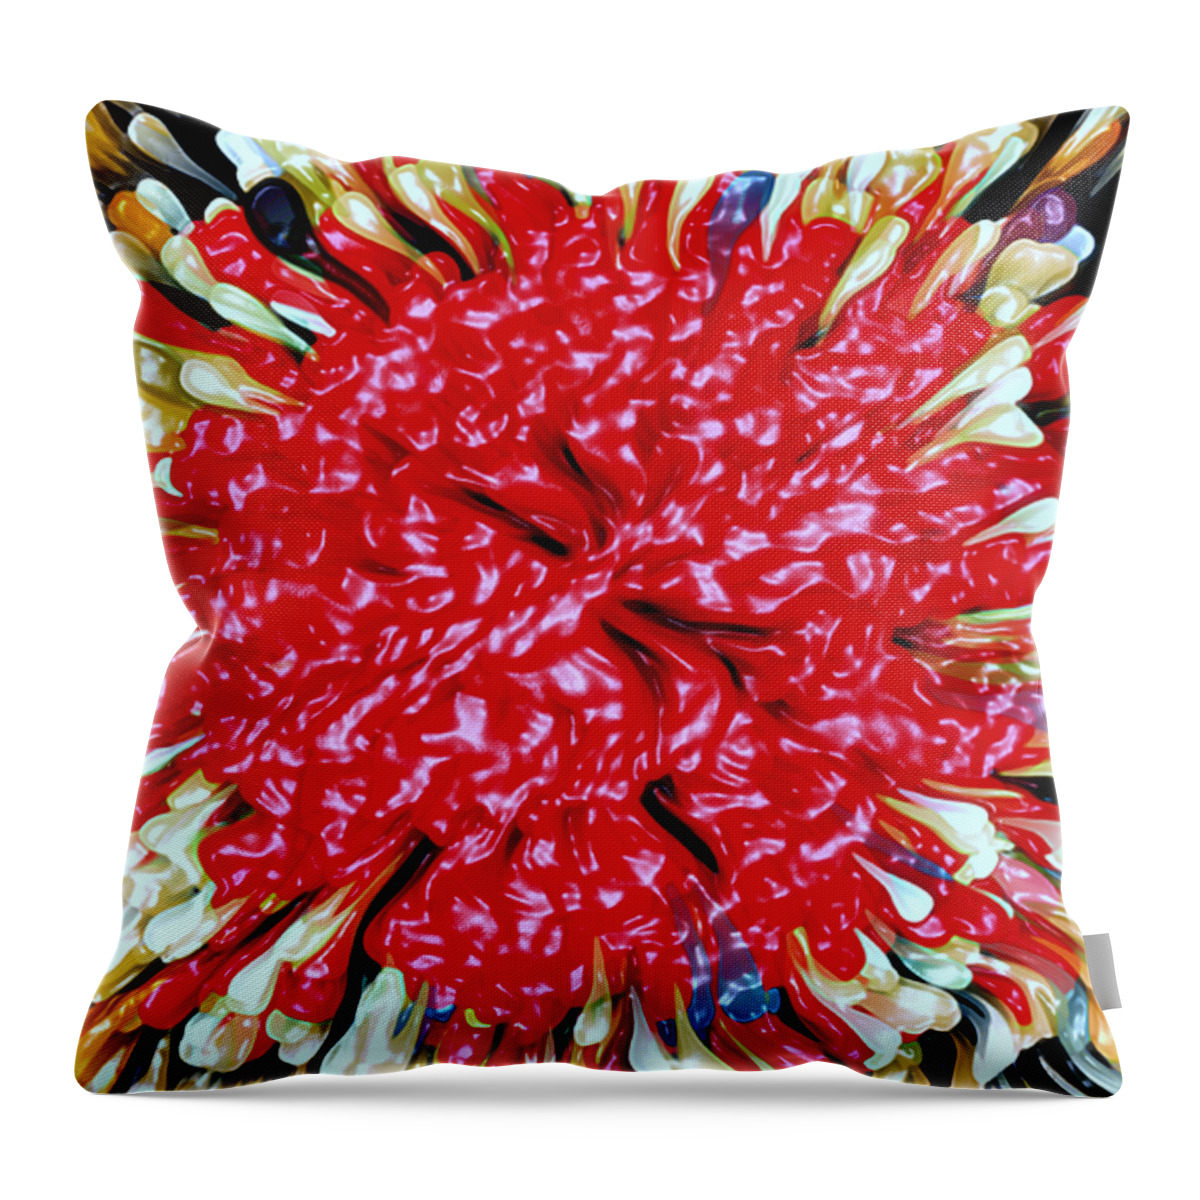 Splash Throw Pillow featuring the digital art Candy Corn by David Manlove